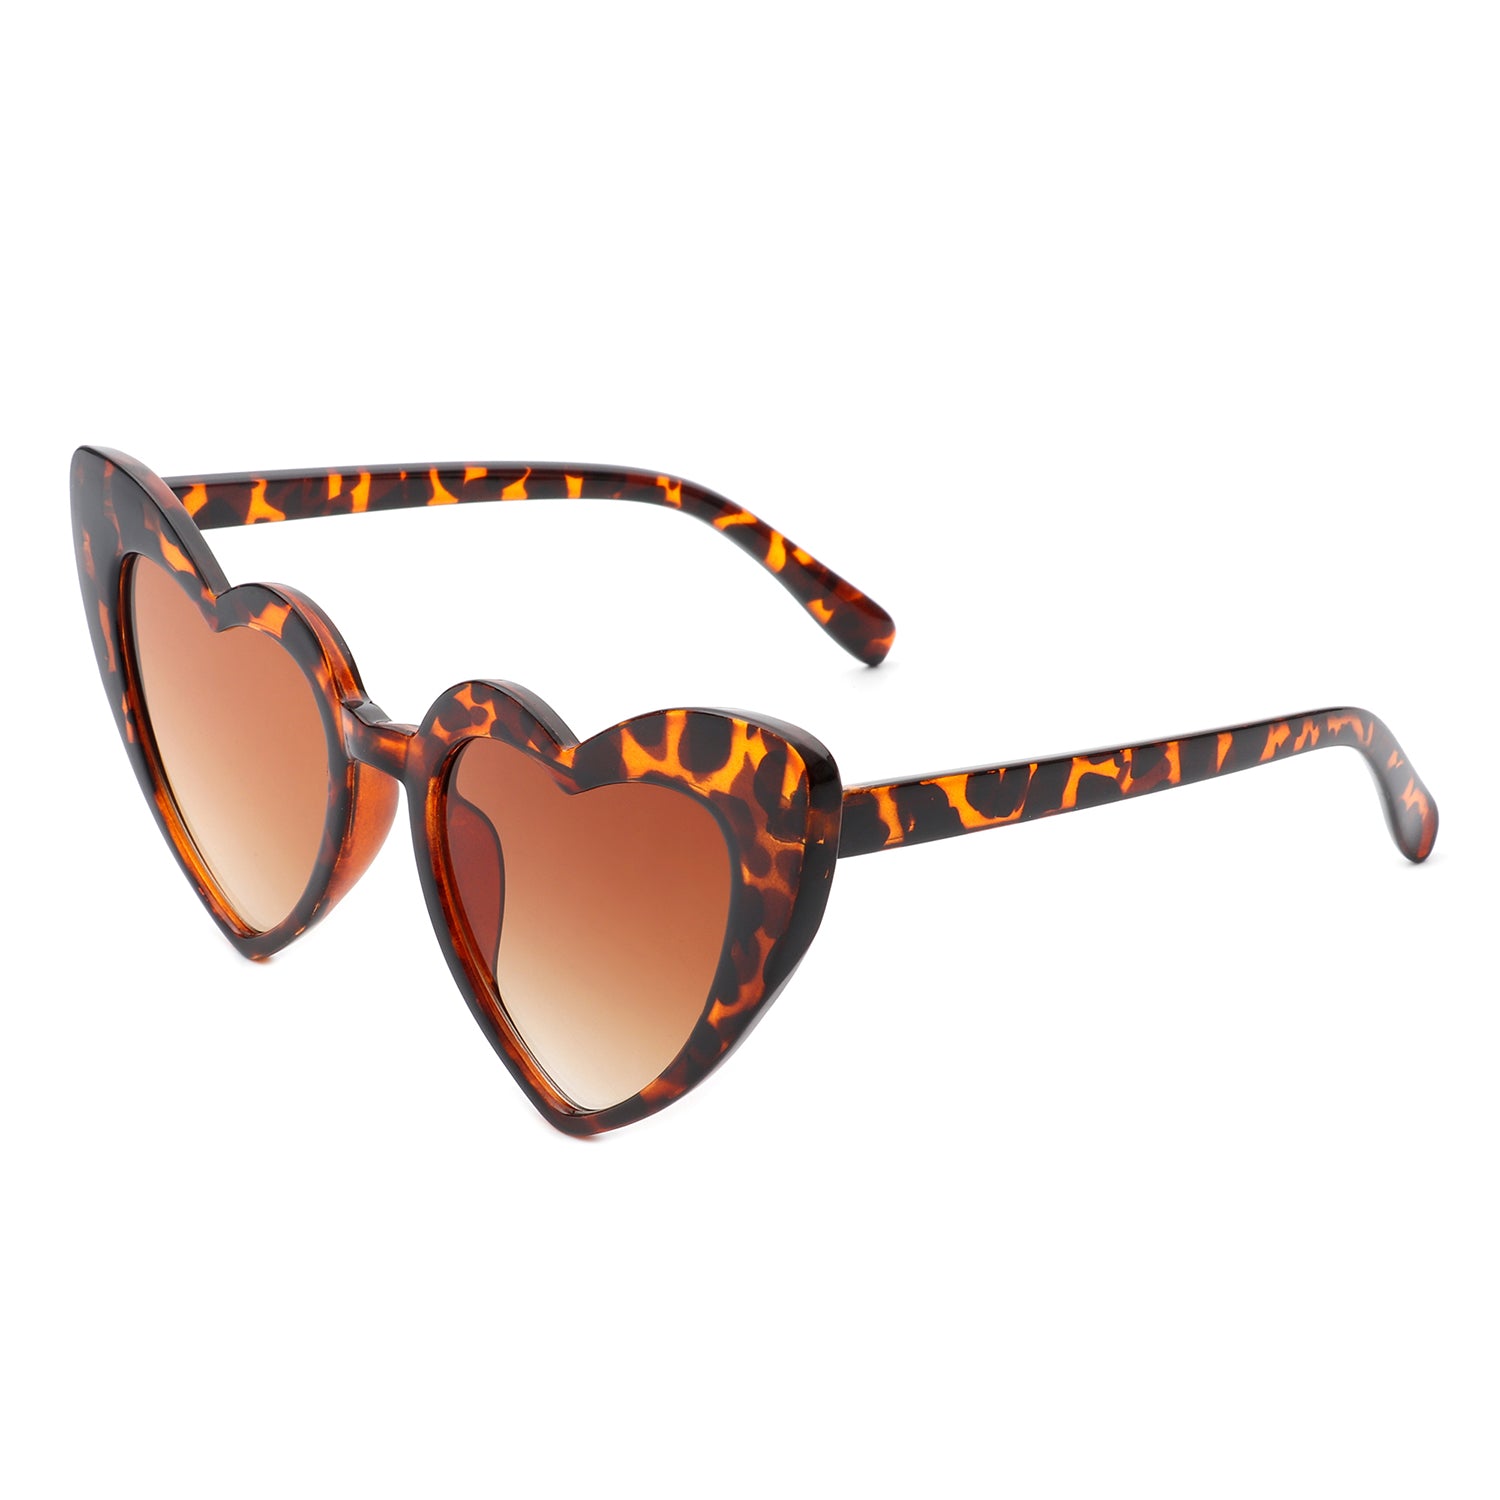 Raelin - Oversize Heart Shape High Pointed Fashion Sunglasses Tortoise